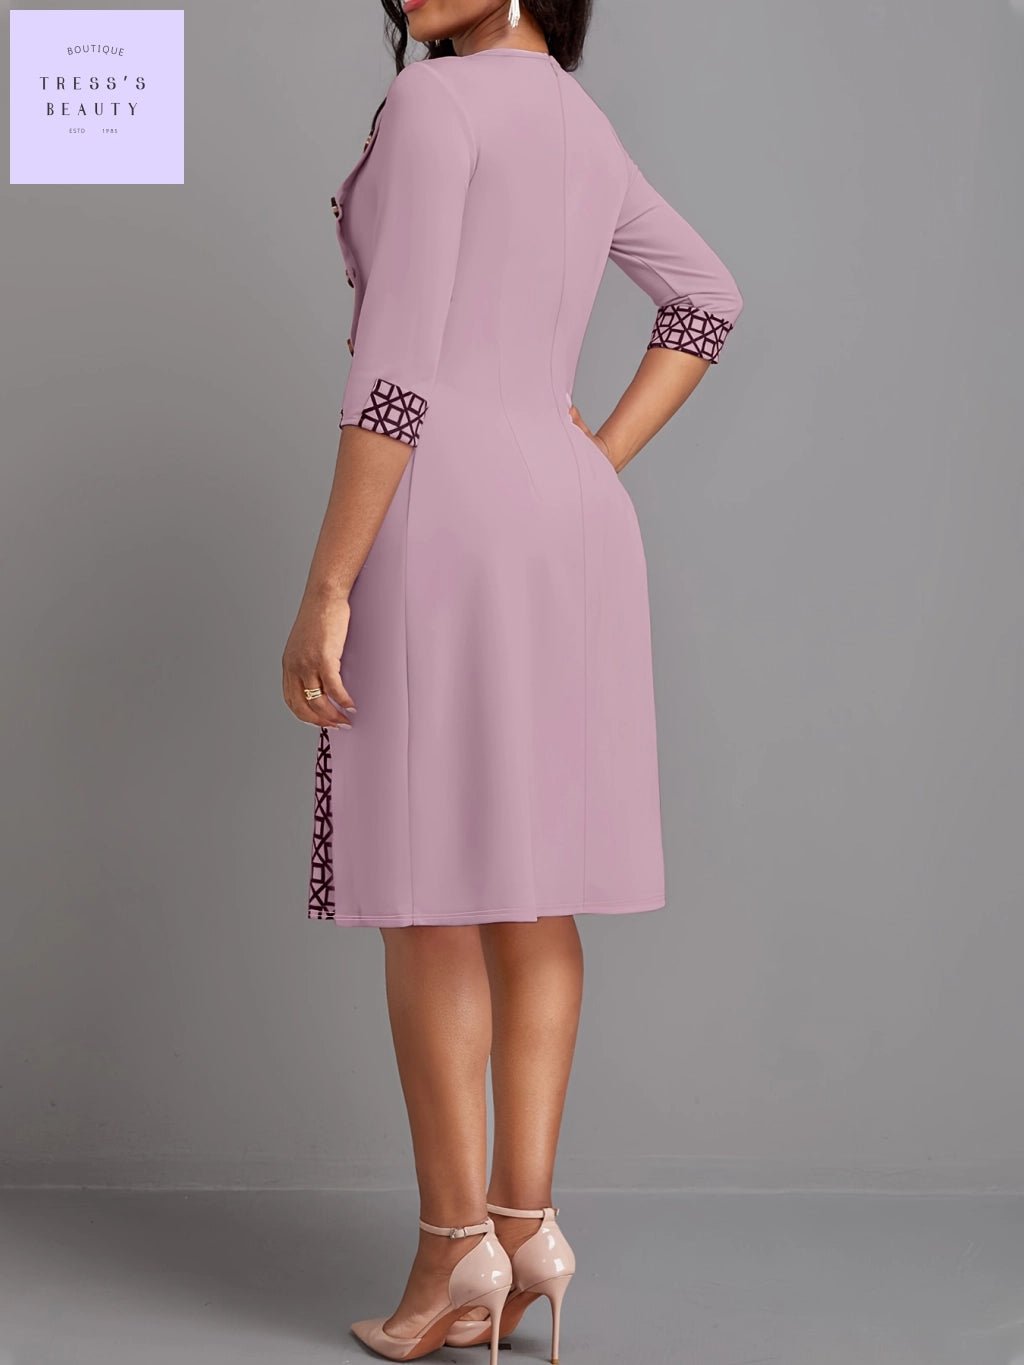 Geometric Plaid Dress - Elegant Half Sleeve, Button Decor, Mid Elasticity - Women's Clothing - Tress's Beauty